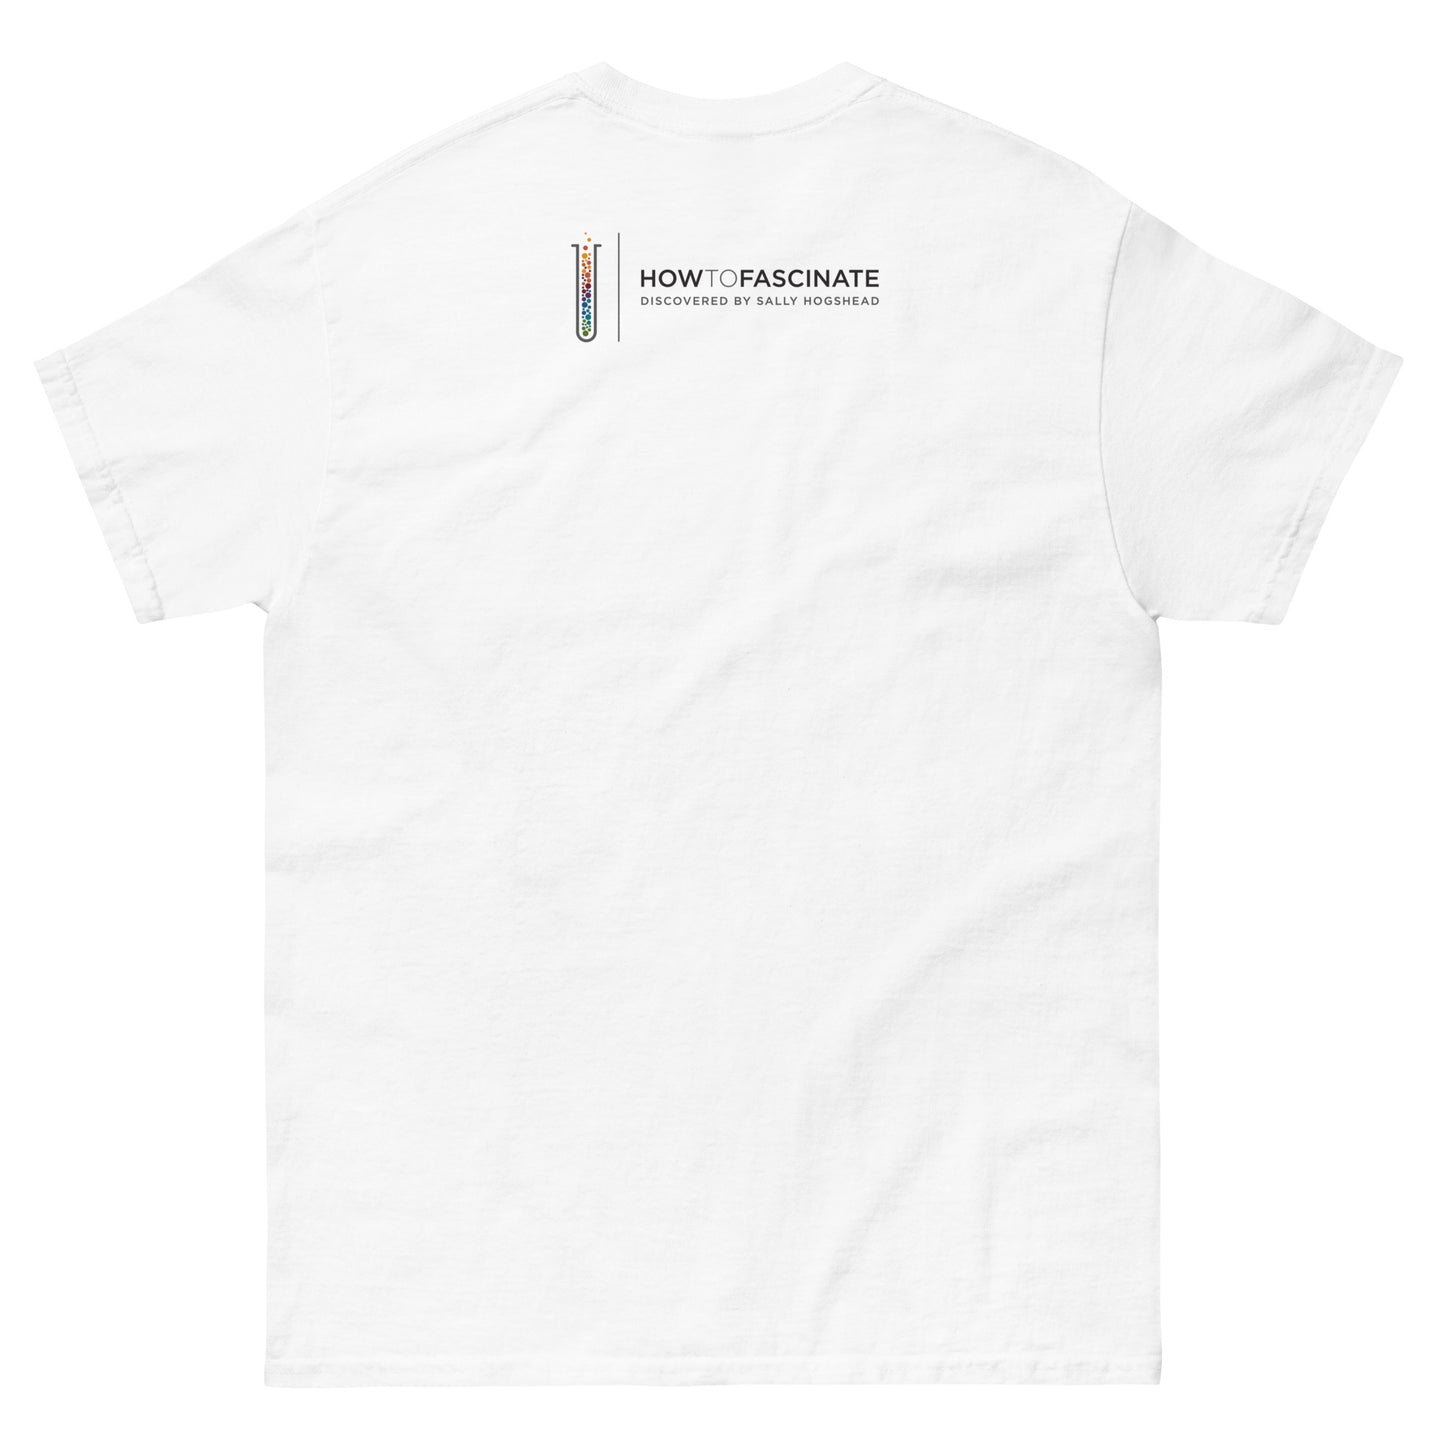 The Architect - Men's Archetype short sleeve t-shirt